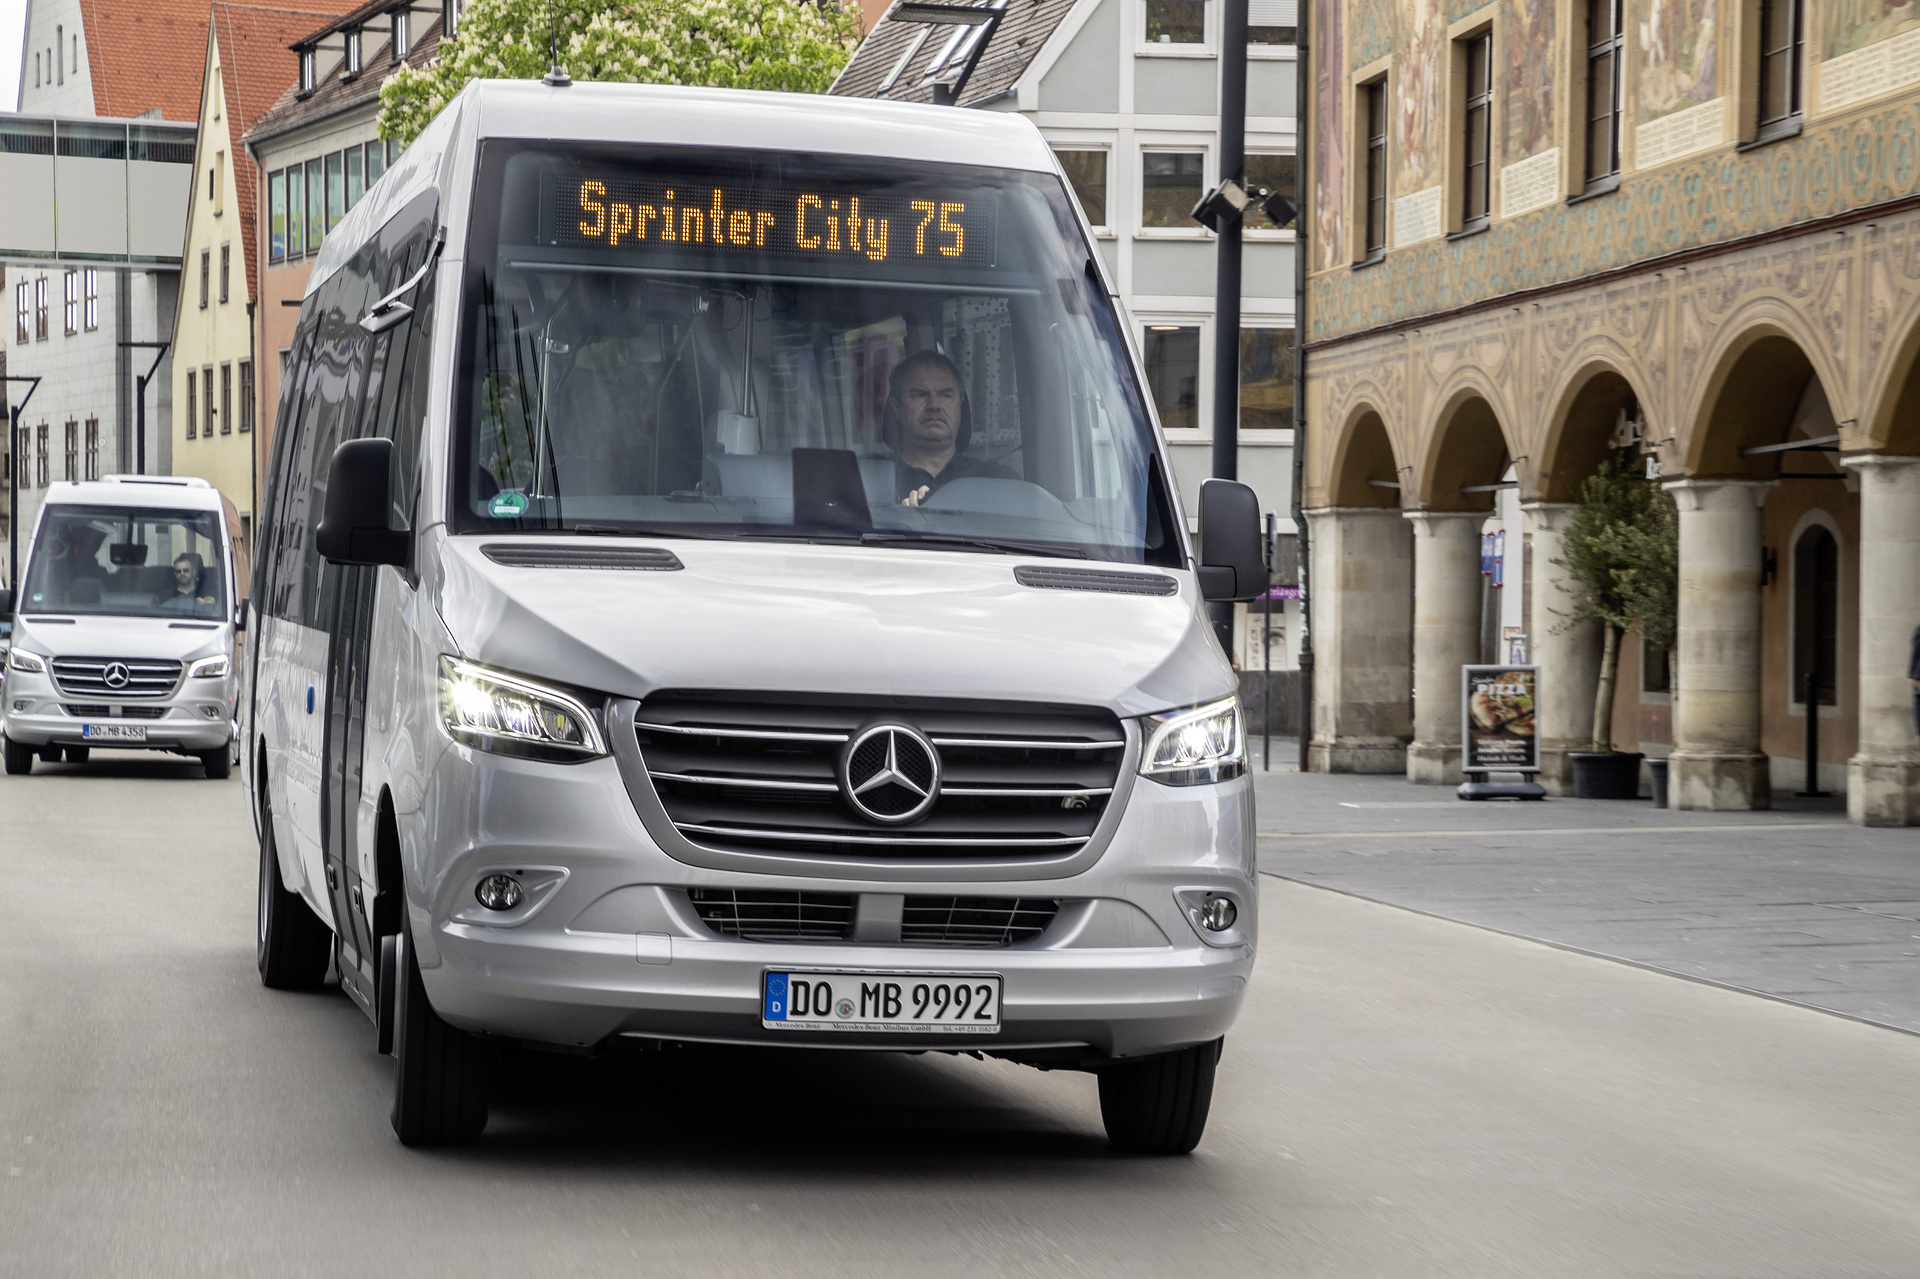 Mercedes-Benz Sprinter City 75 2021